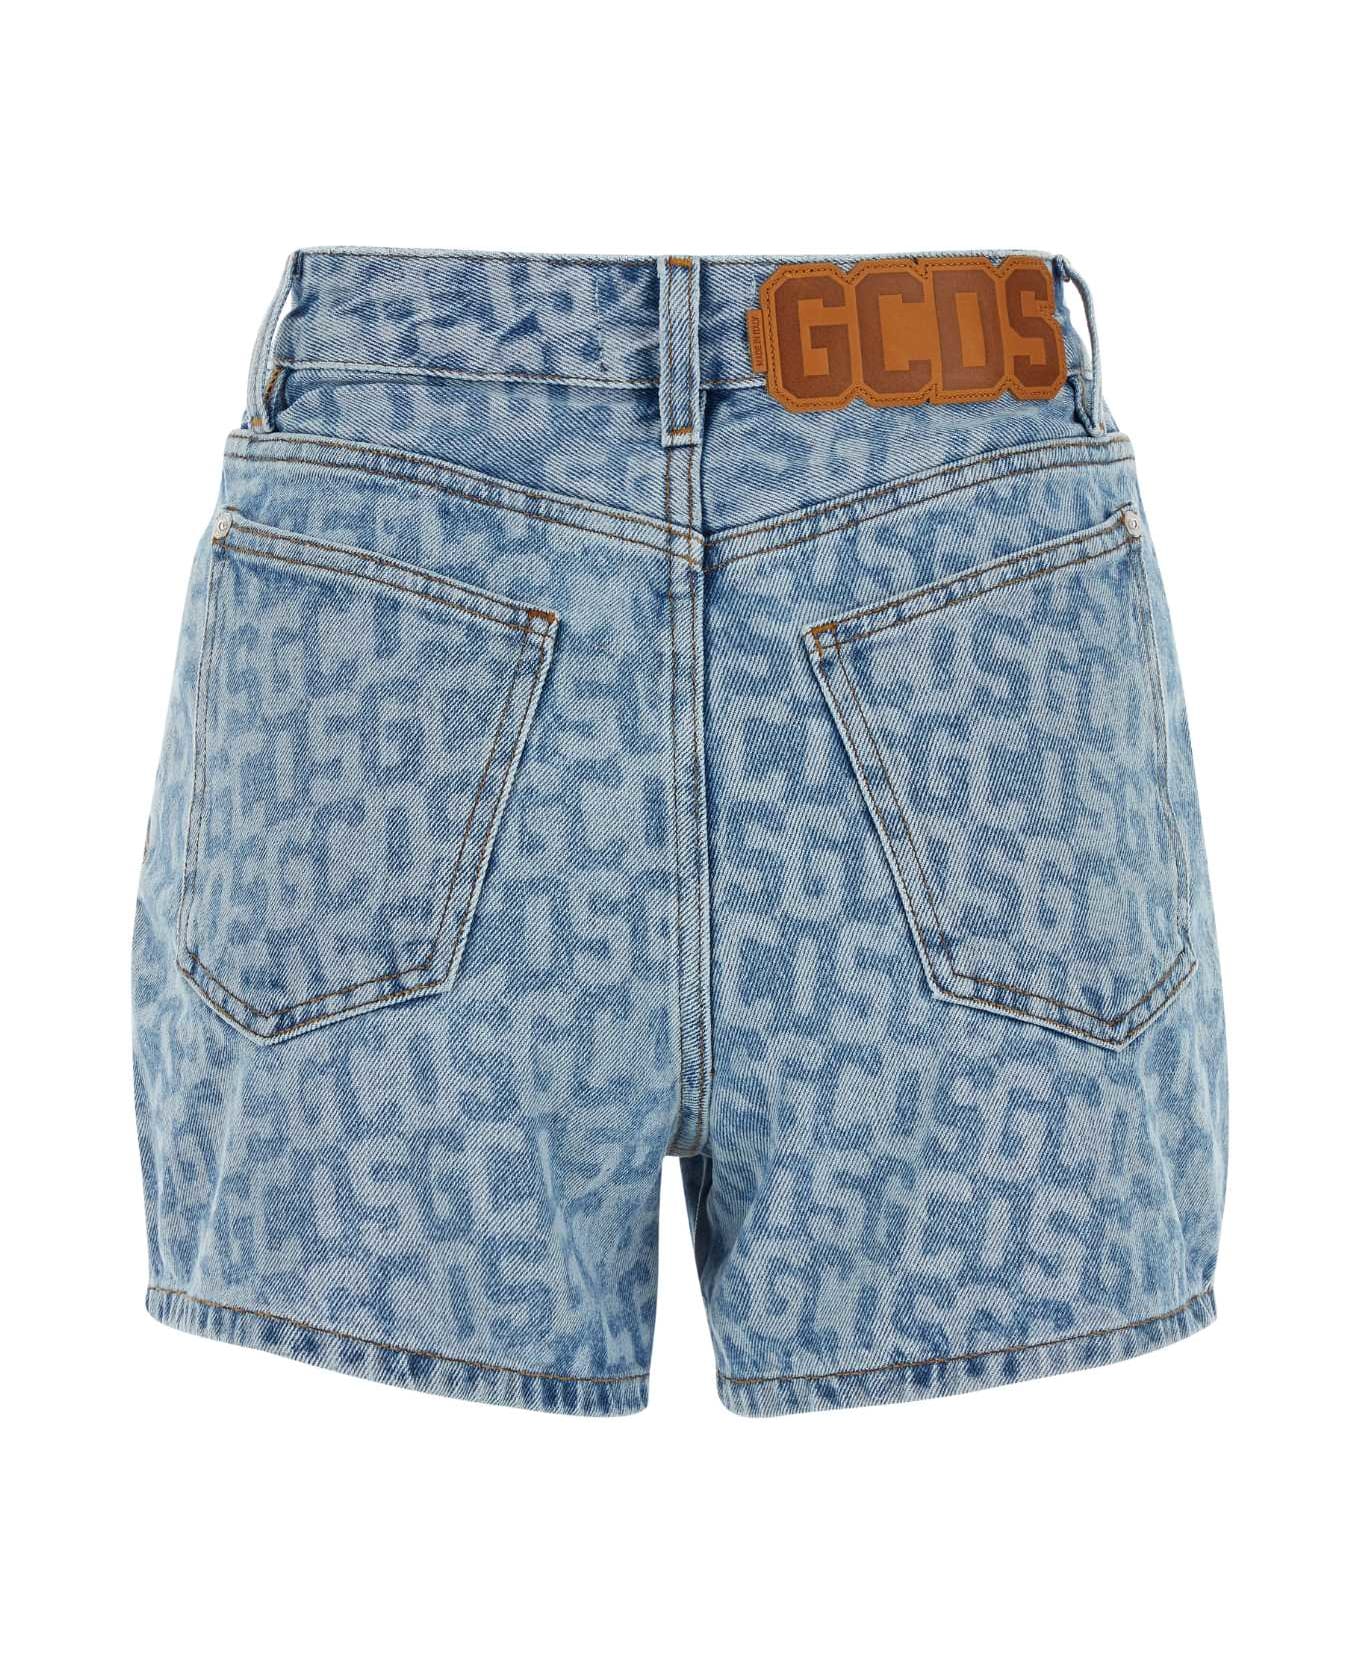 GCDS Printed Denim Shorts - Light Blue